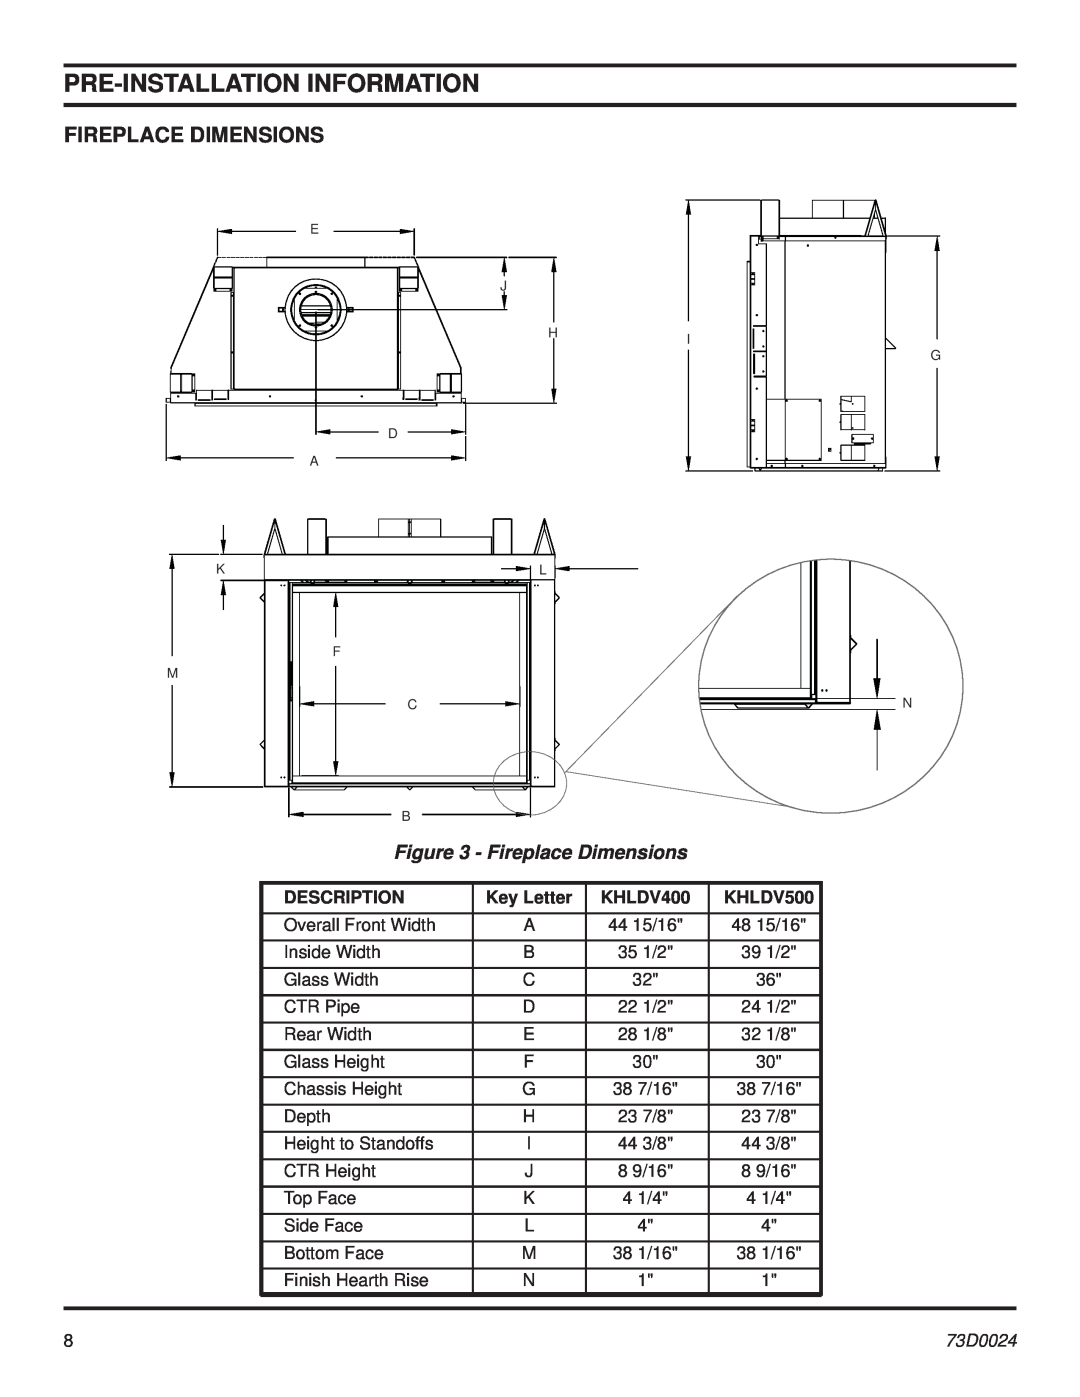 Monessen Hearth KHLDV SERIES manual Fireplace Dimensions, Pre-Installationinformation, 73D0024 